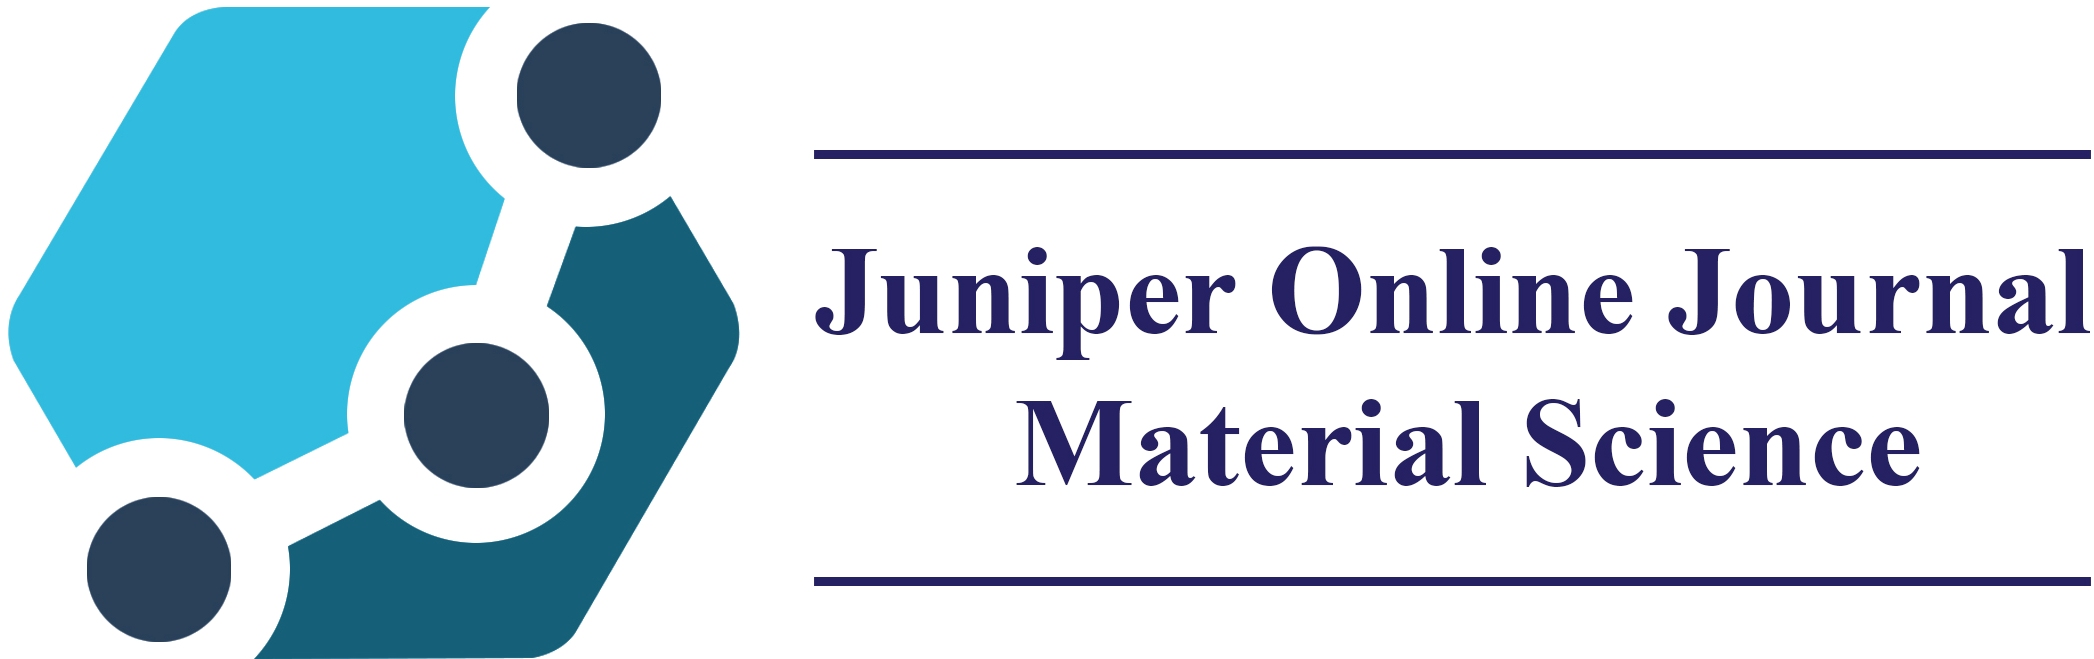 Juniper Online Journal Material Science (JOJMS)  Juniper Publishers